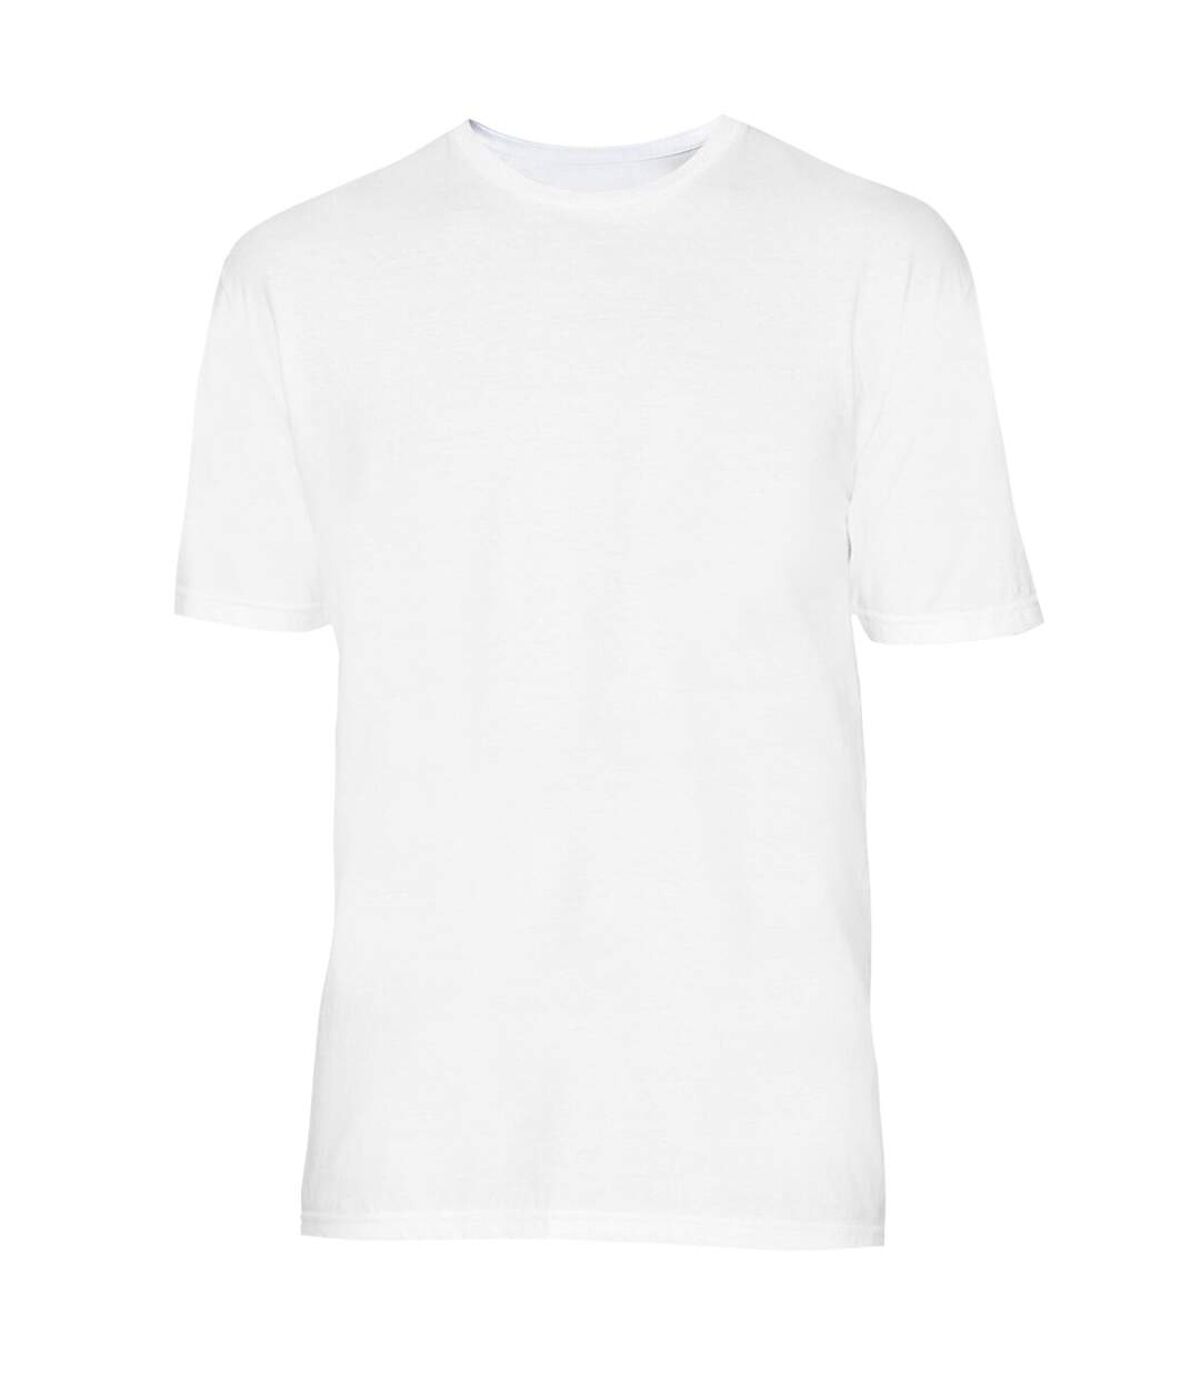 Gildan - T-shirt manches courtes EZ - Unisexe (Blanc) - UTBC4636